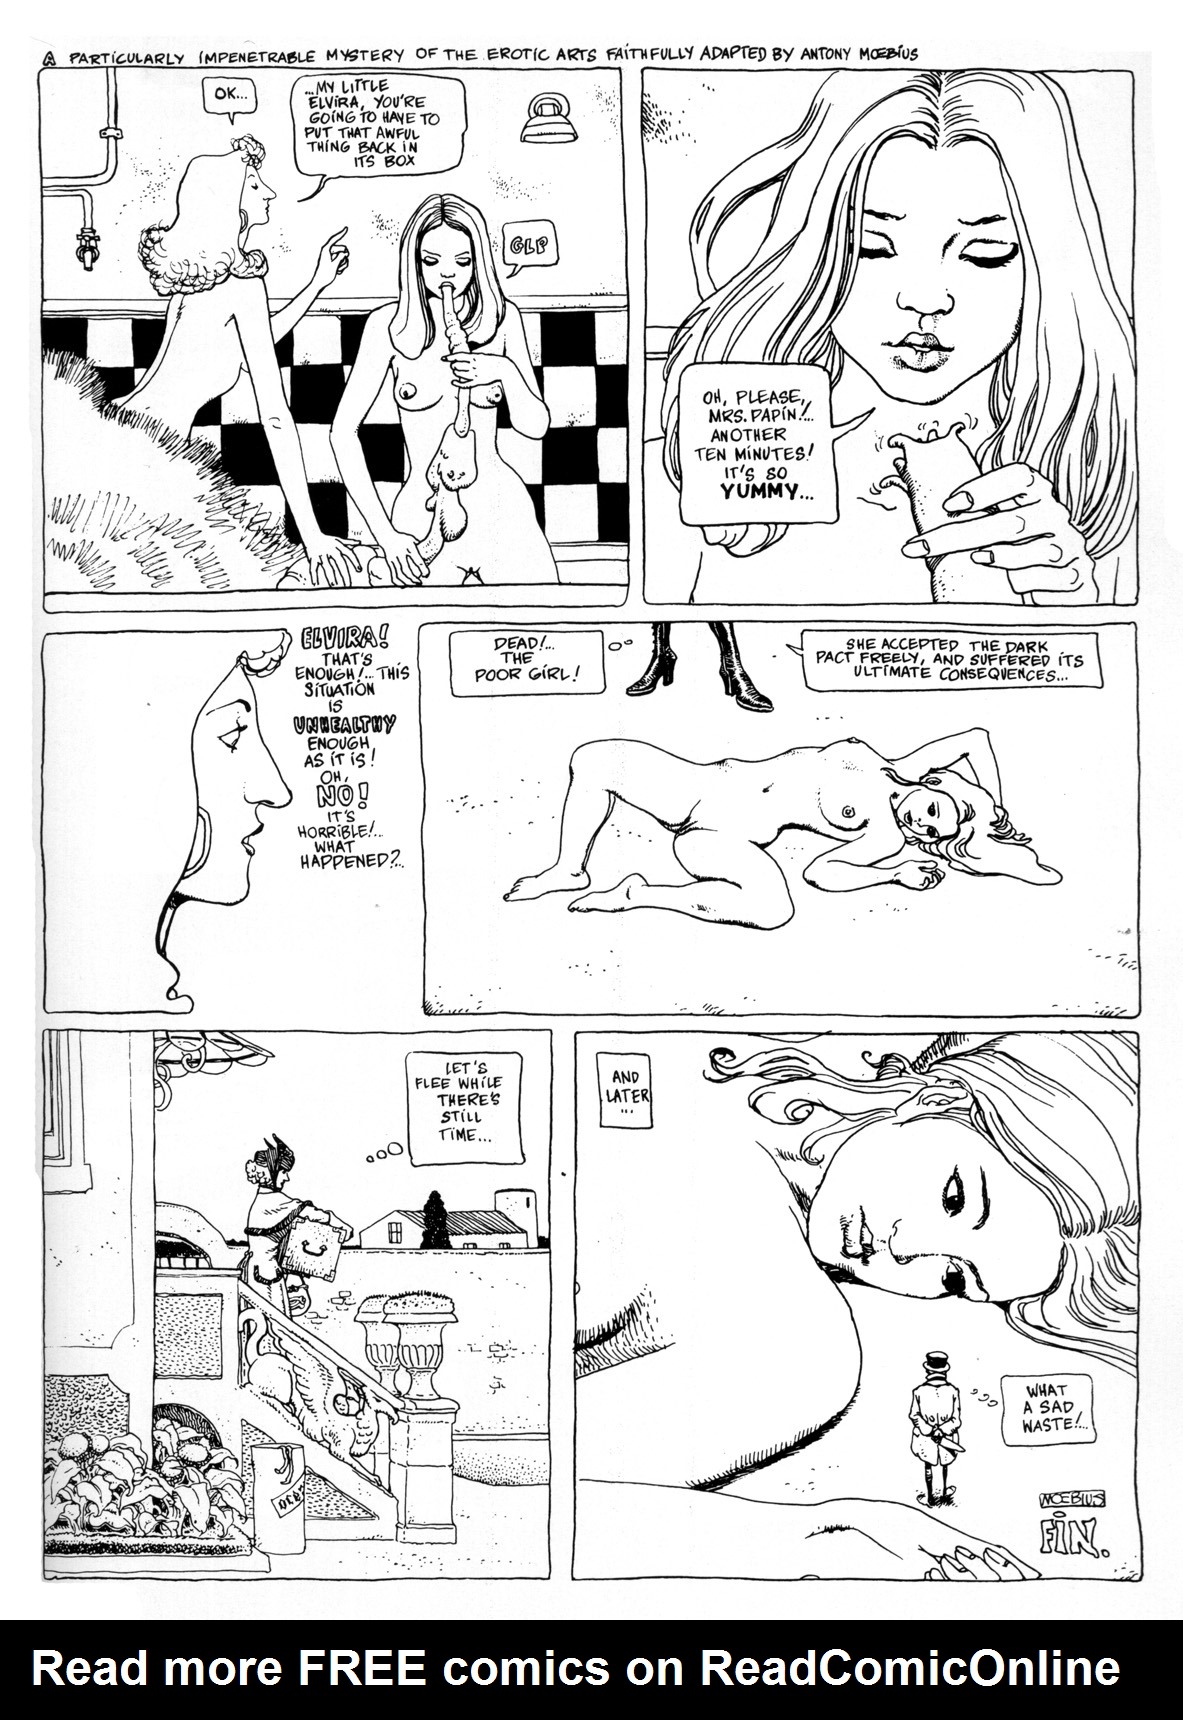 Read online Epic Graphic Novel: Moebius comic -  Issue # TPB 0.5 - 36